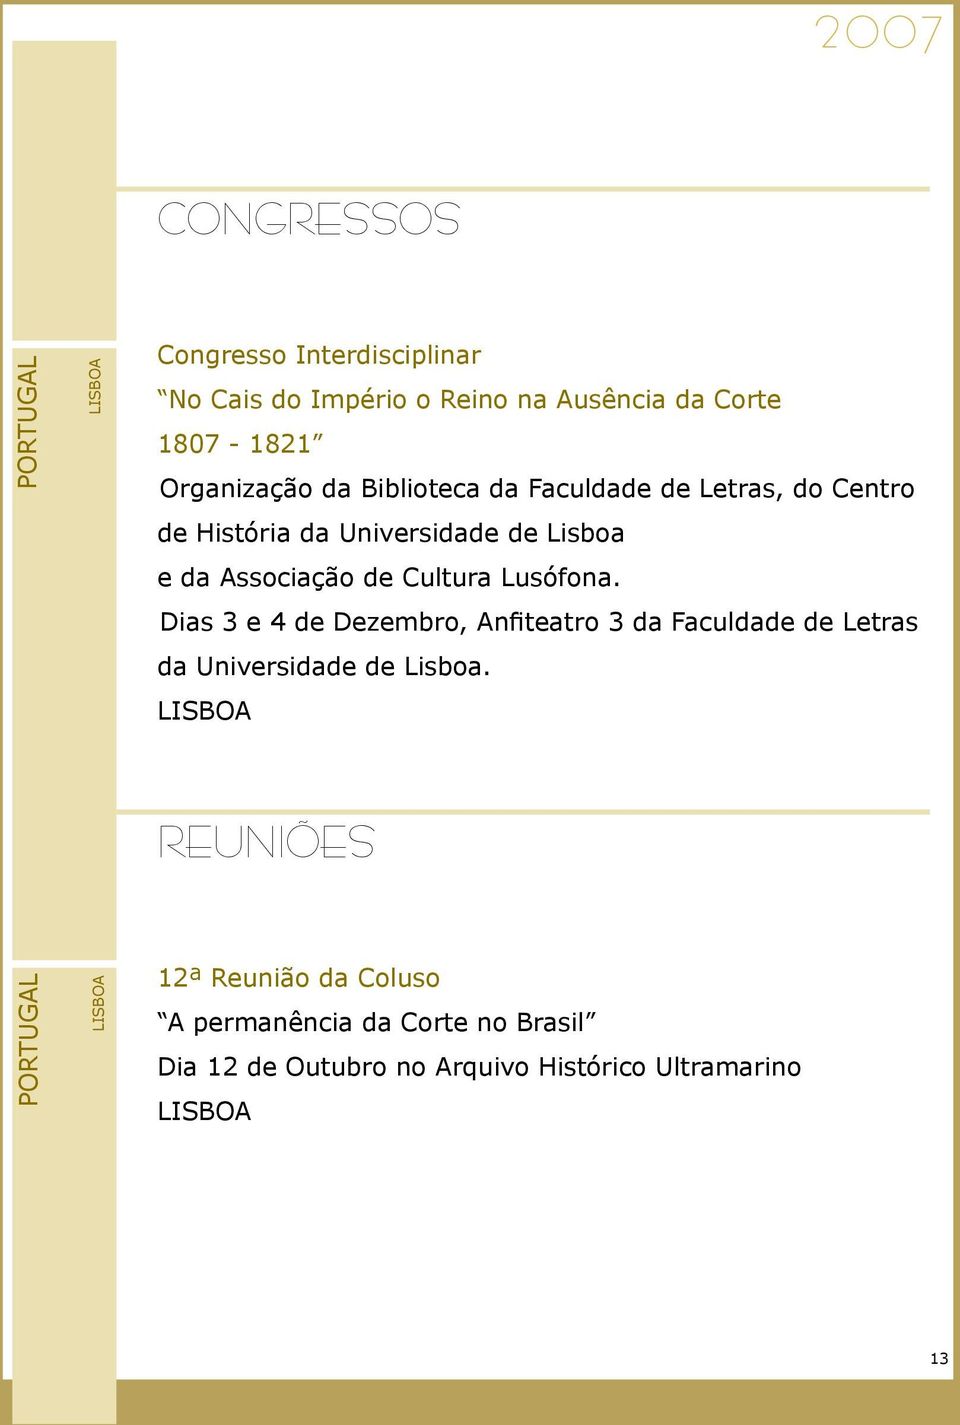 Cultura Lusófona. Dias 3 e 4 de Dezembro, Anfiteatro 3 da Faculdade de Letras da Universidade de Lisboa.